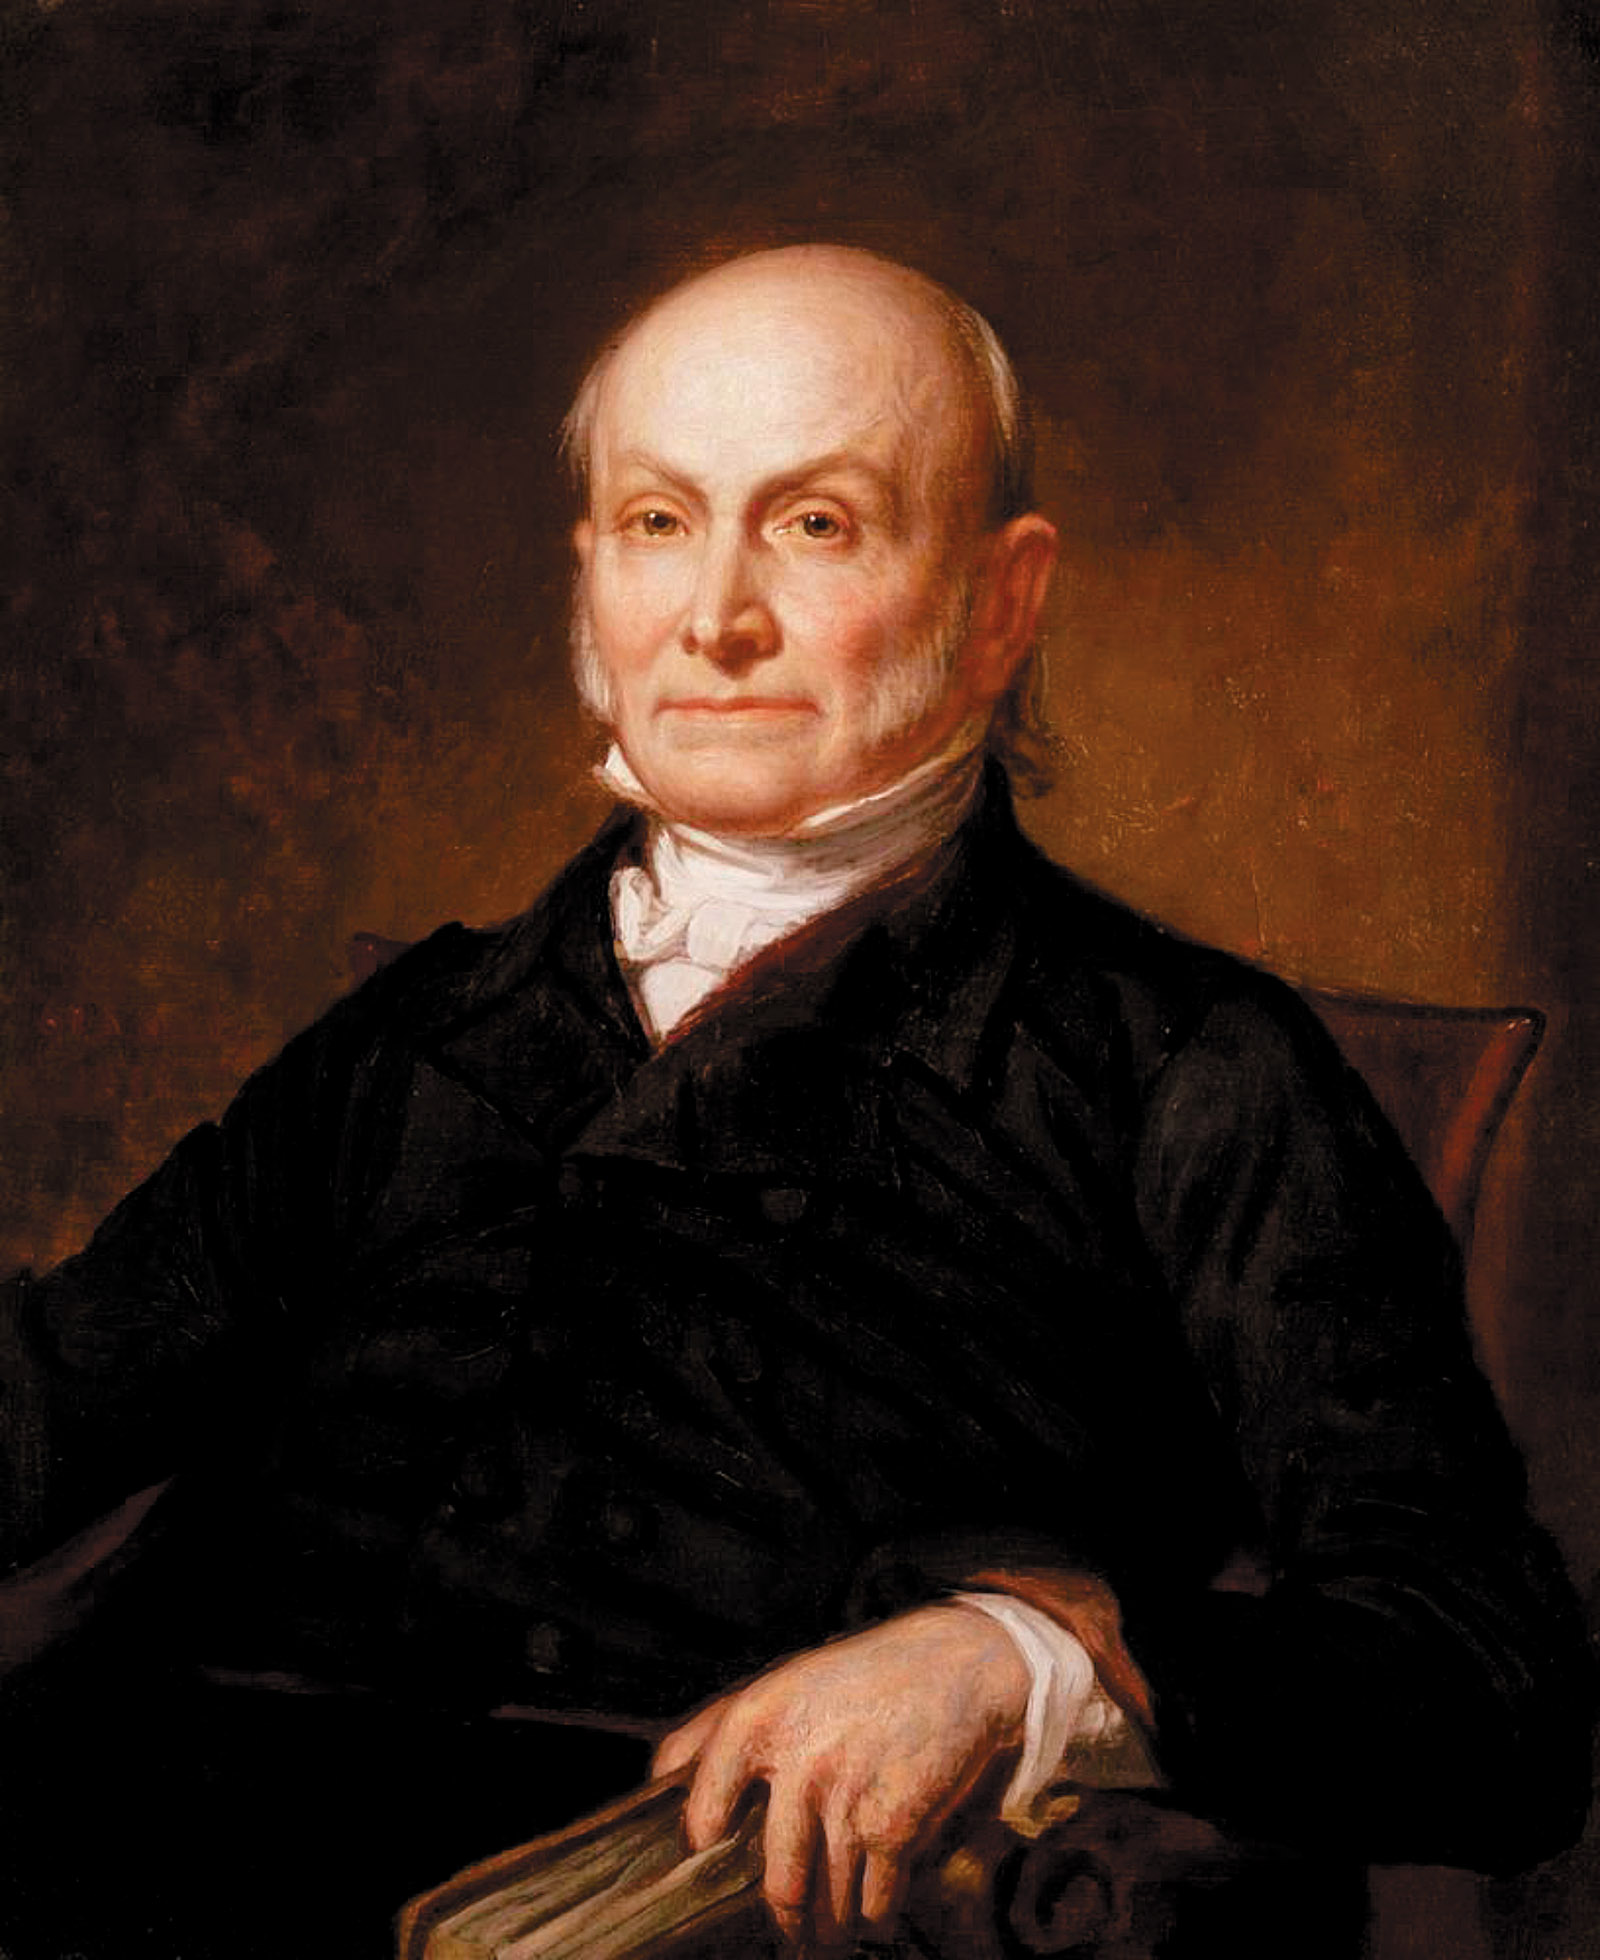 John Quincy Adams; painting by George Healy, 1846